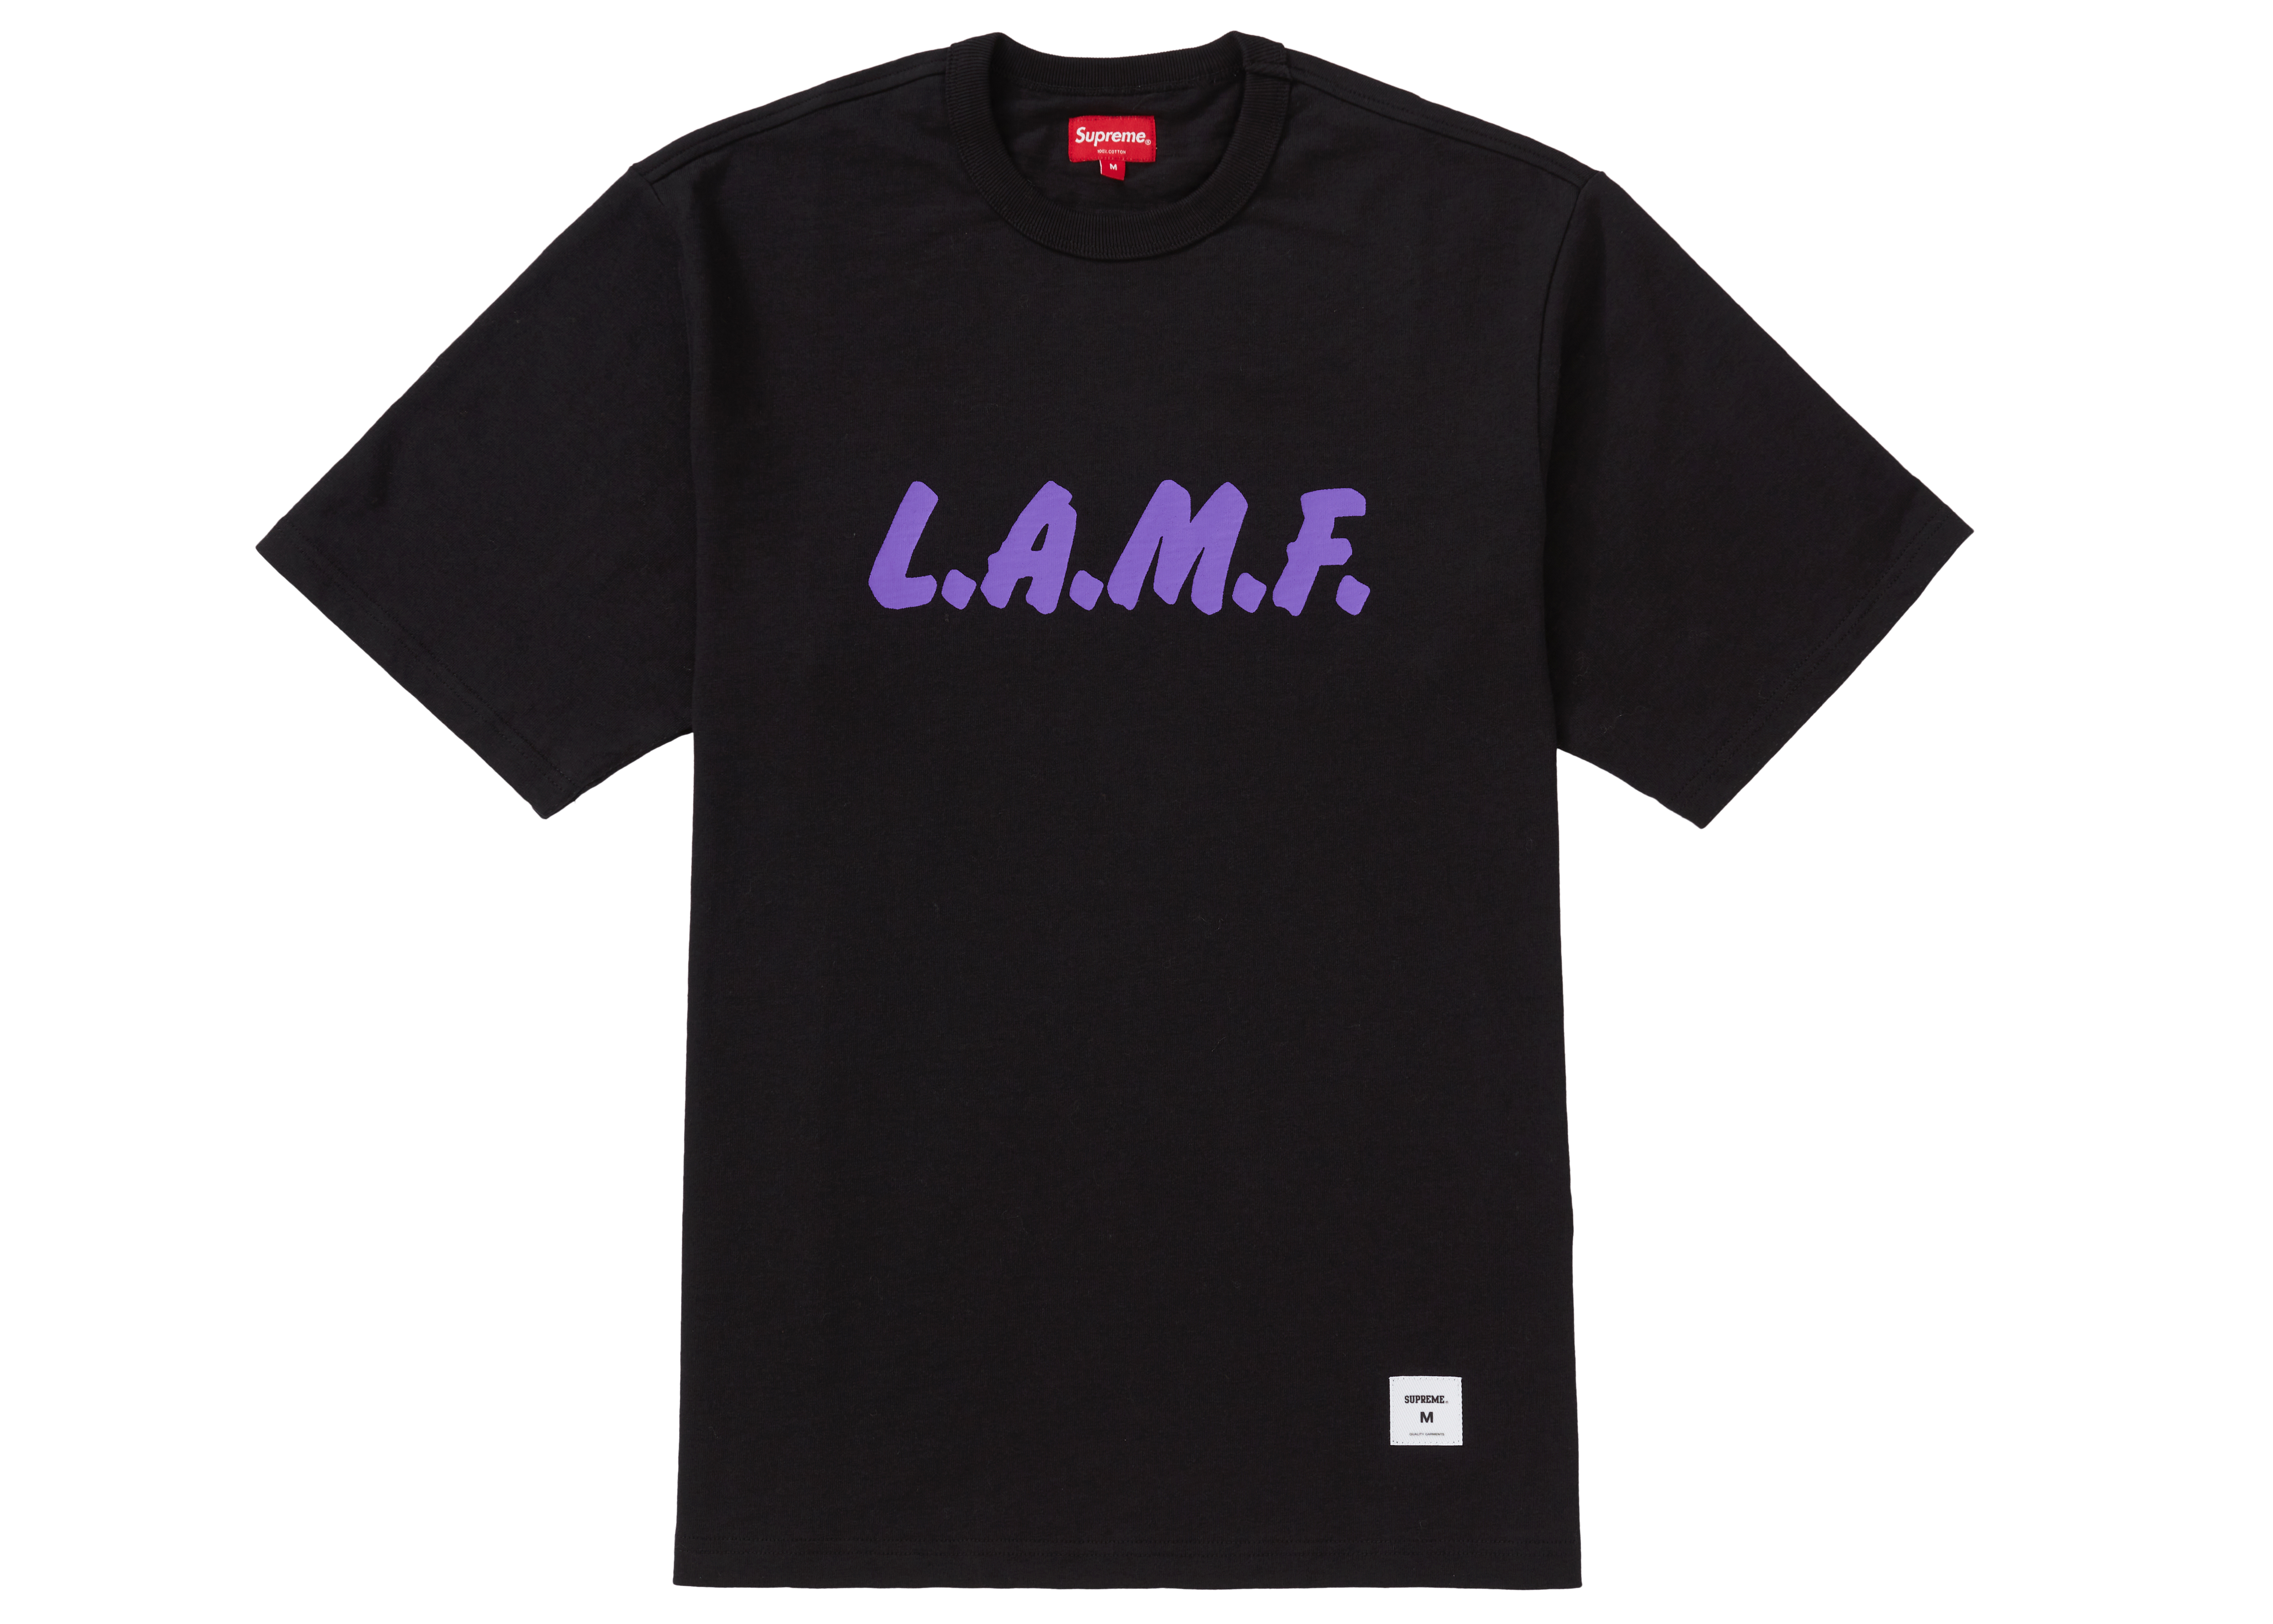 Tシャツ/カットソー(半袖/袖なし)Supreme  LAMF  S/S Top